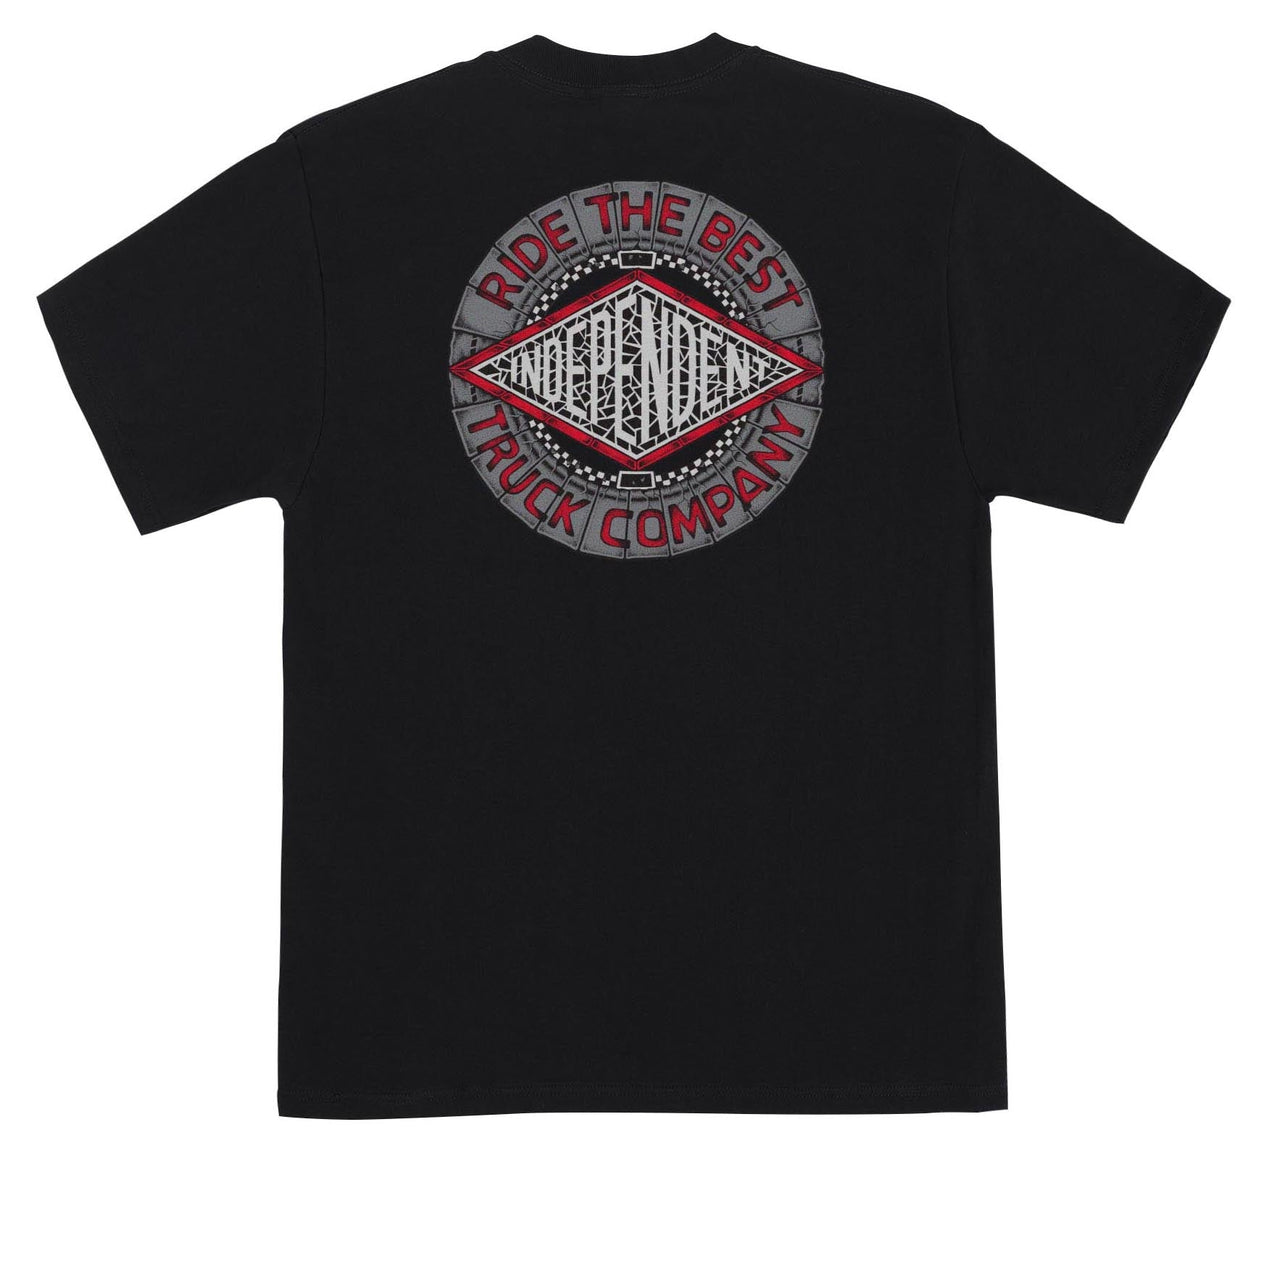 Independent Mako Tile Summit T-Shirt - Black image 1